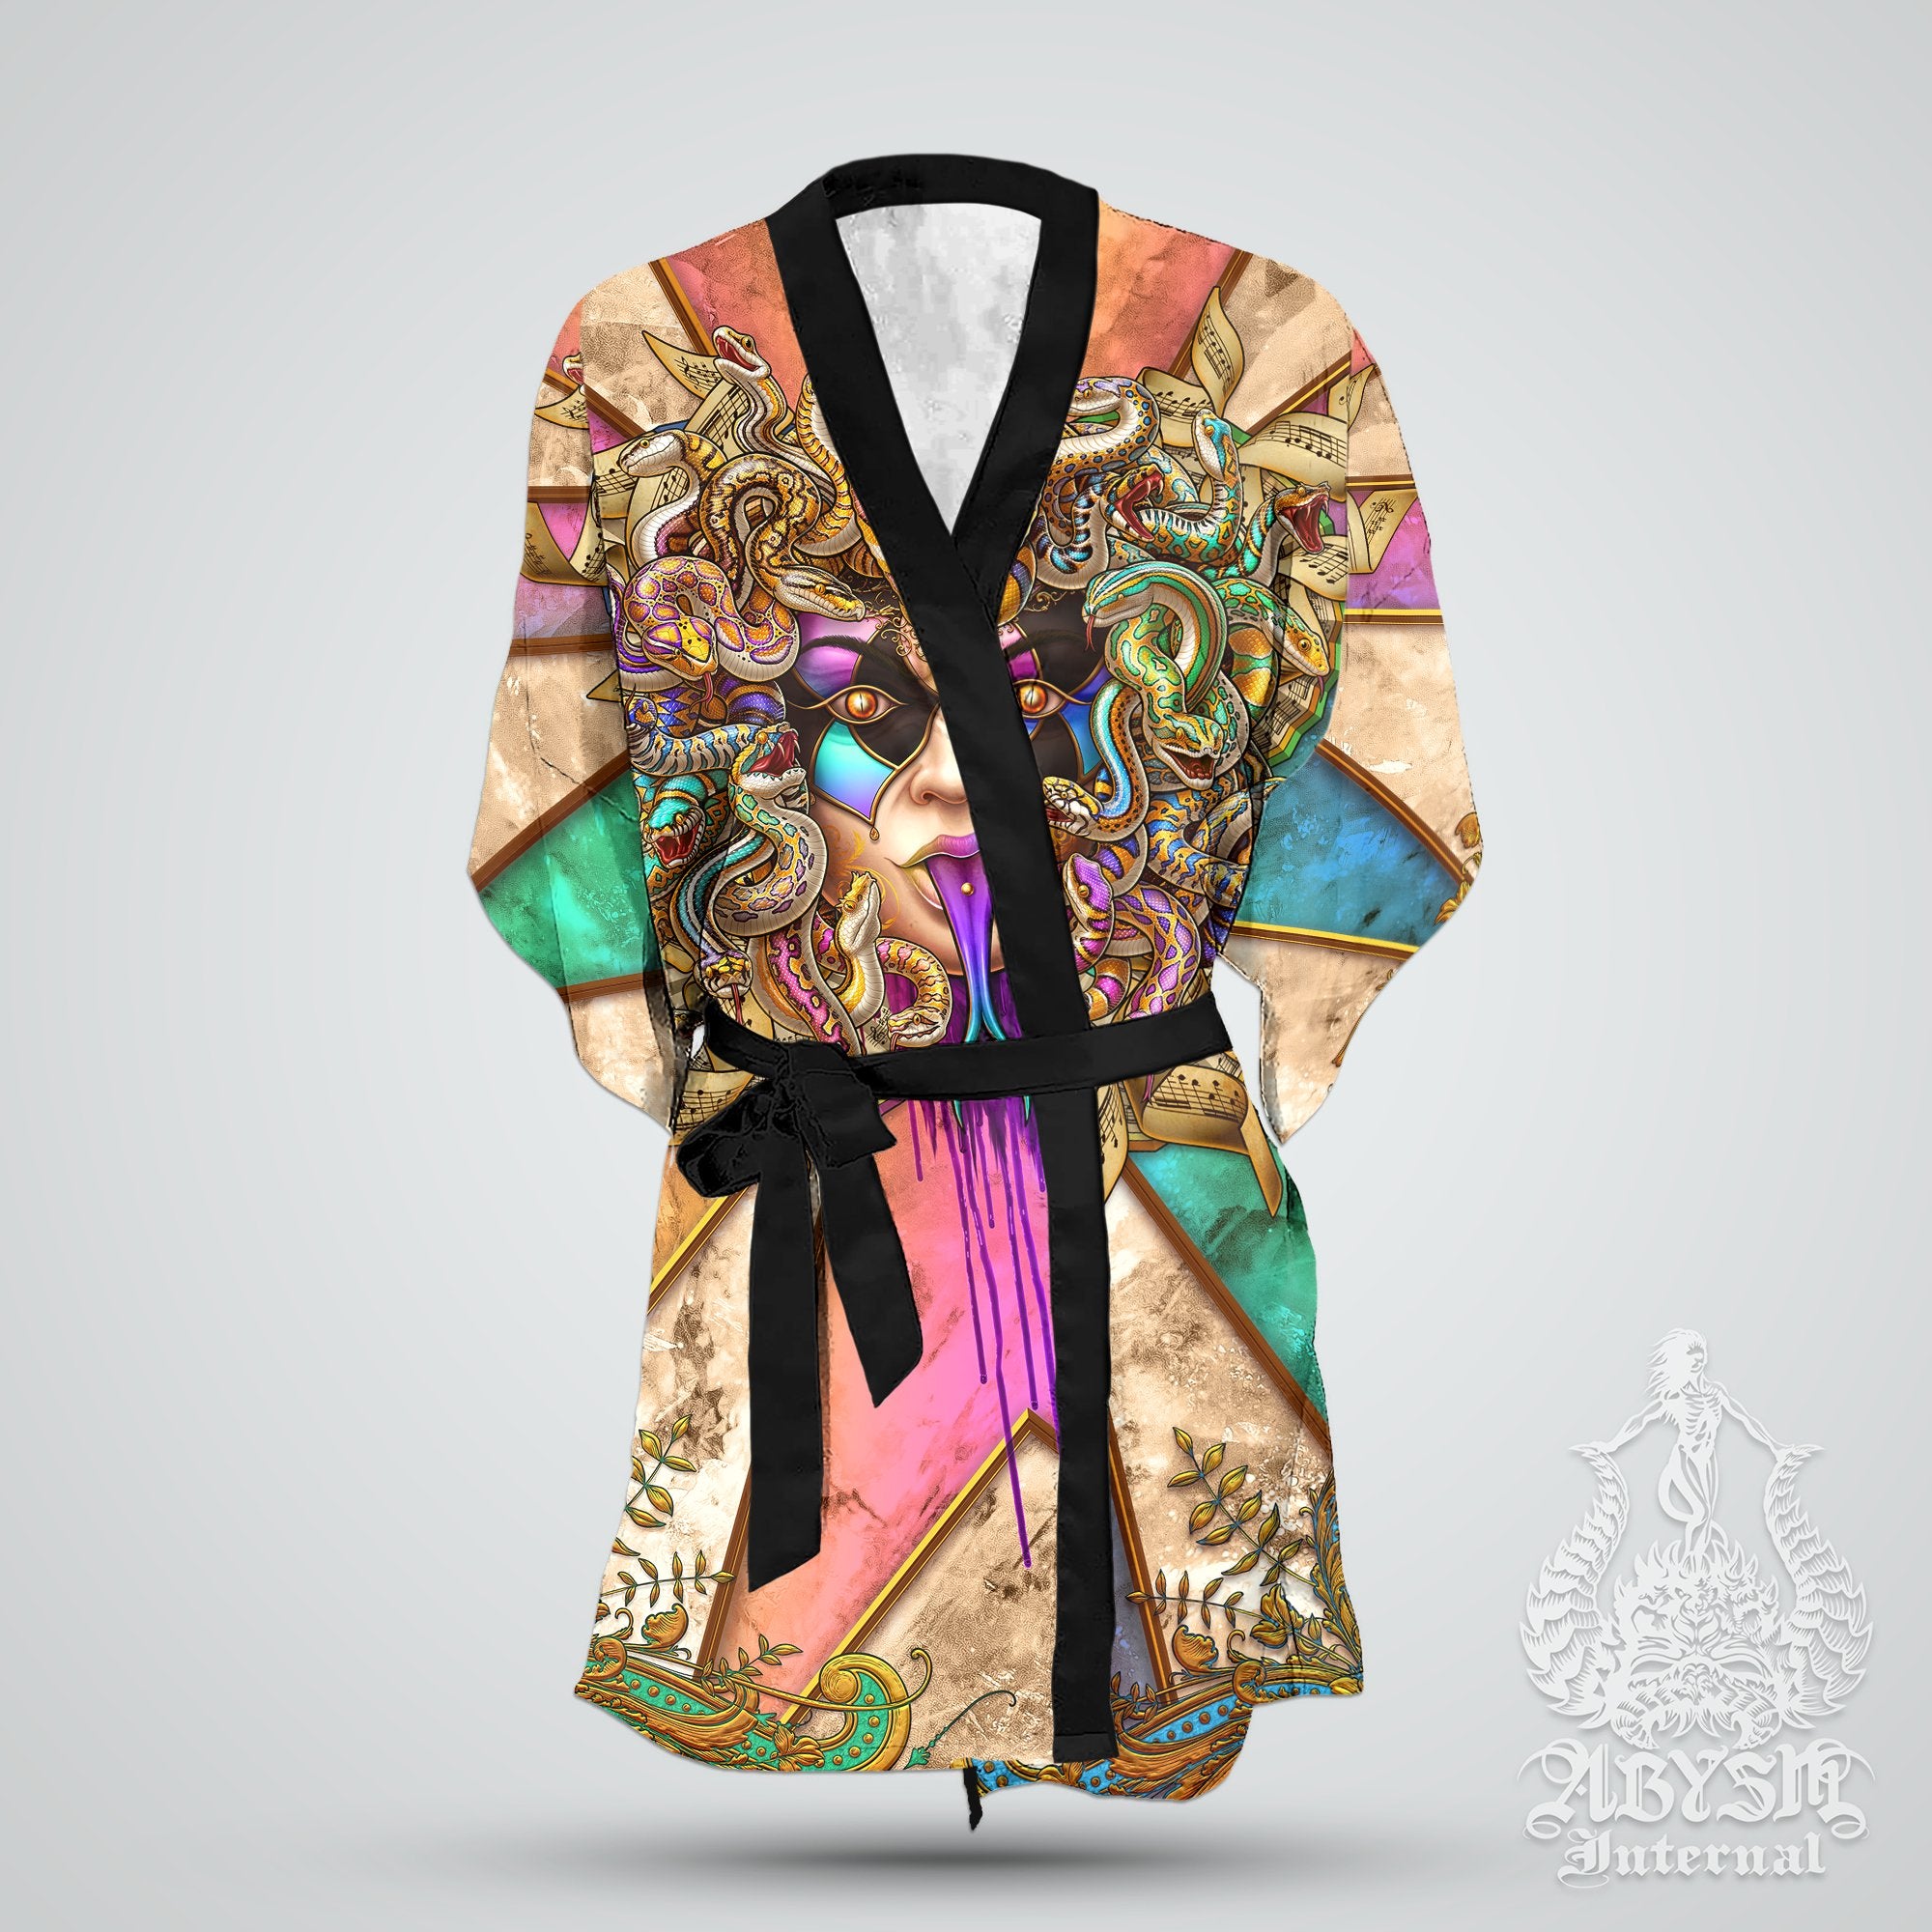 Carnival Short Kimono Robe, Beach Party Outfit, Coverup, Summer Festival, Alternative Clothing, Unisex - Medusa, 7 Colors - Abysm Internal